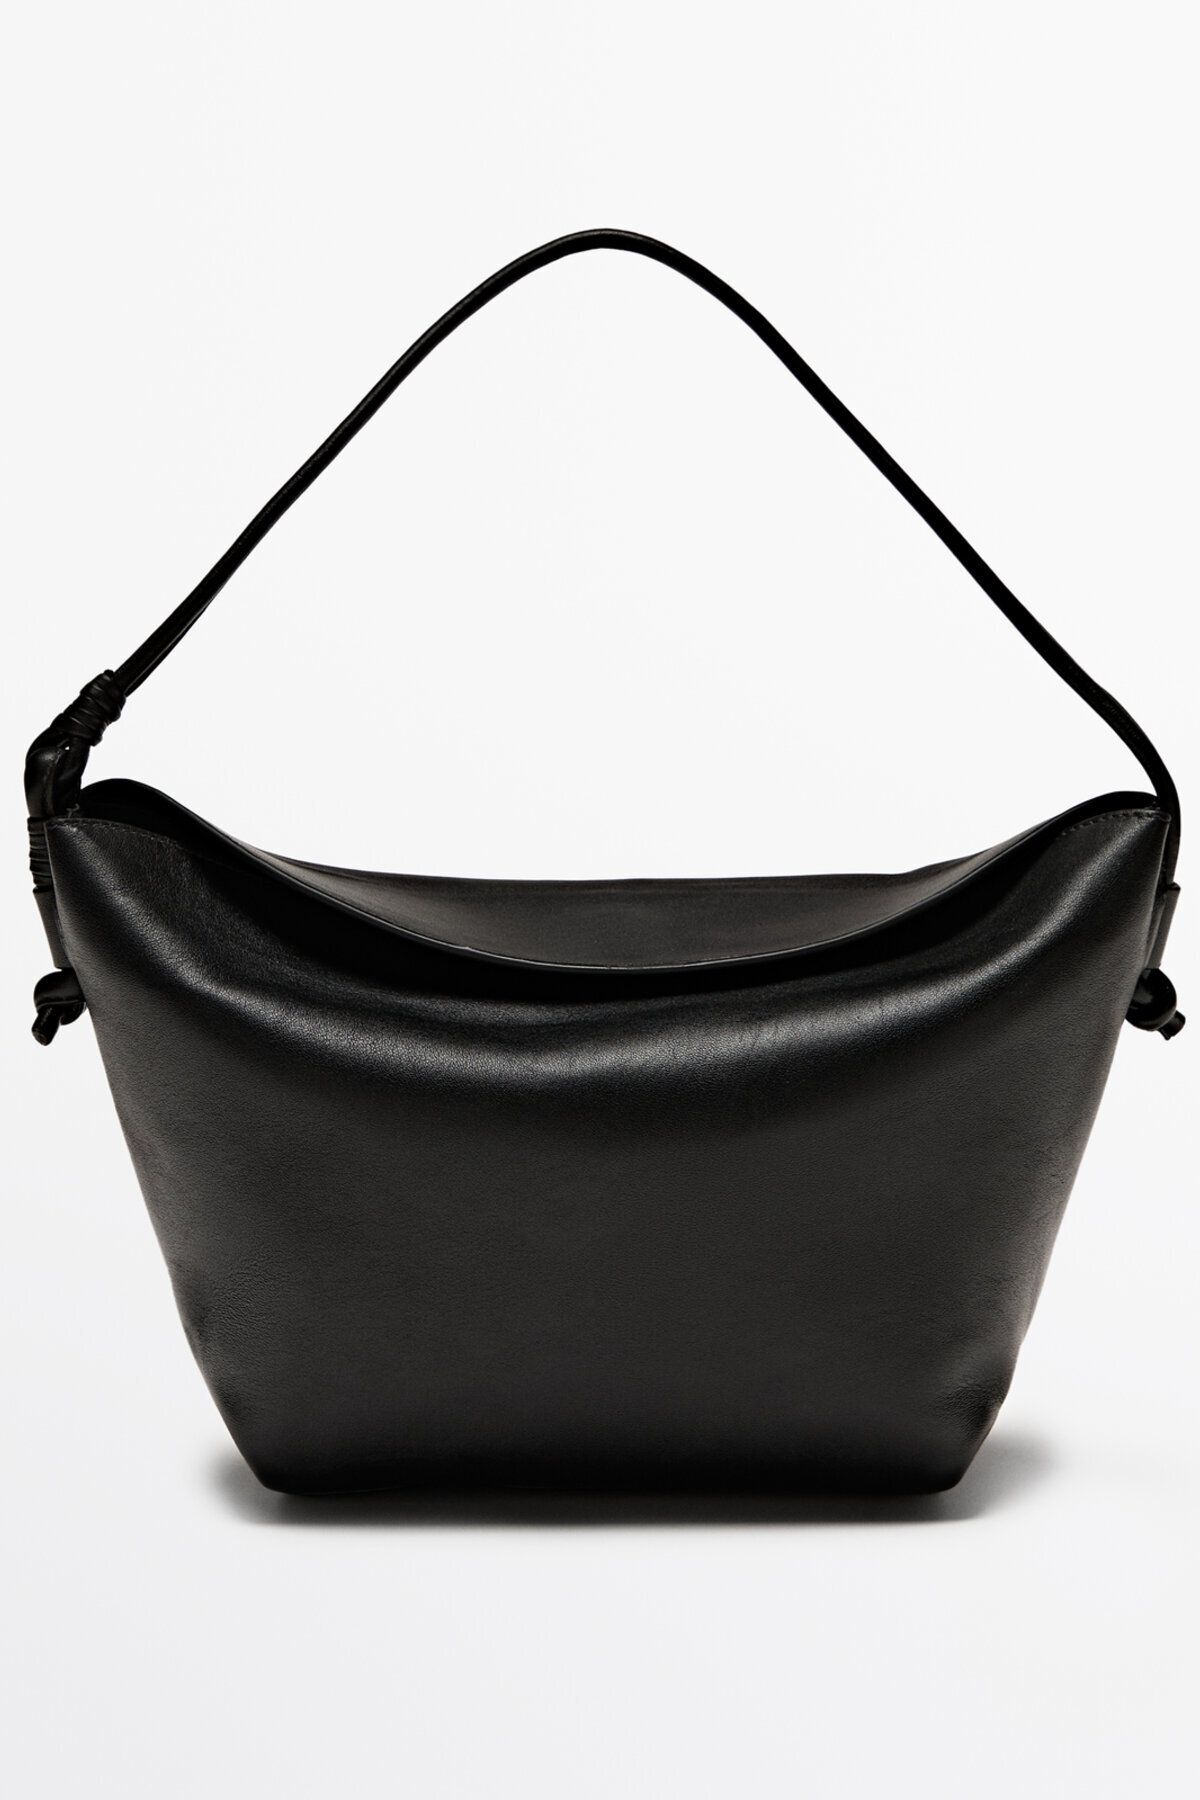 Massimo Dutti Nappa leather bag knots